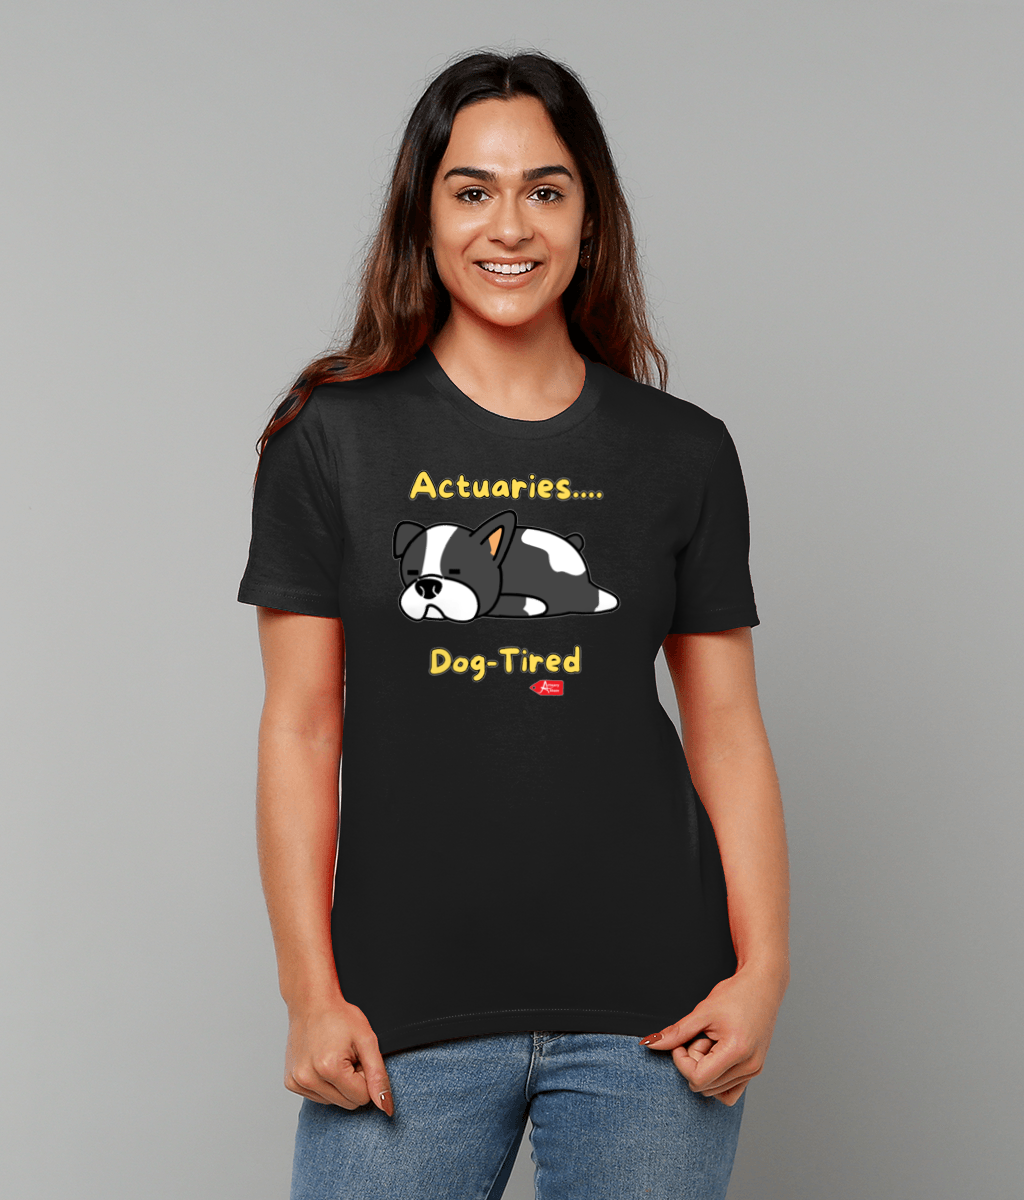 Actuaries Dog Tired T-Shirt